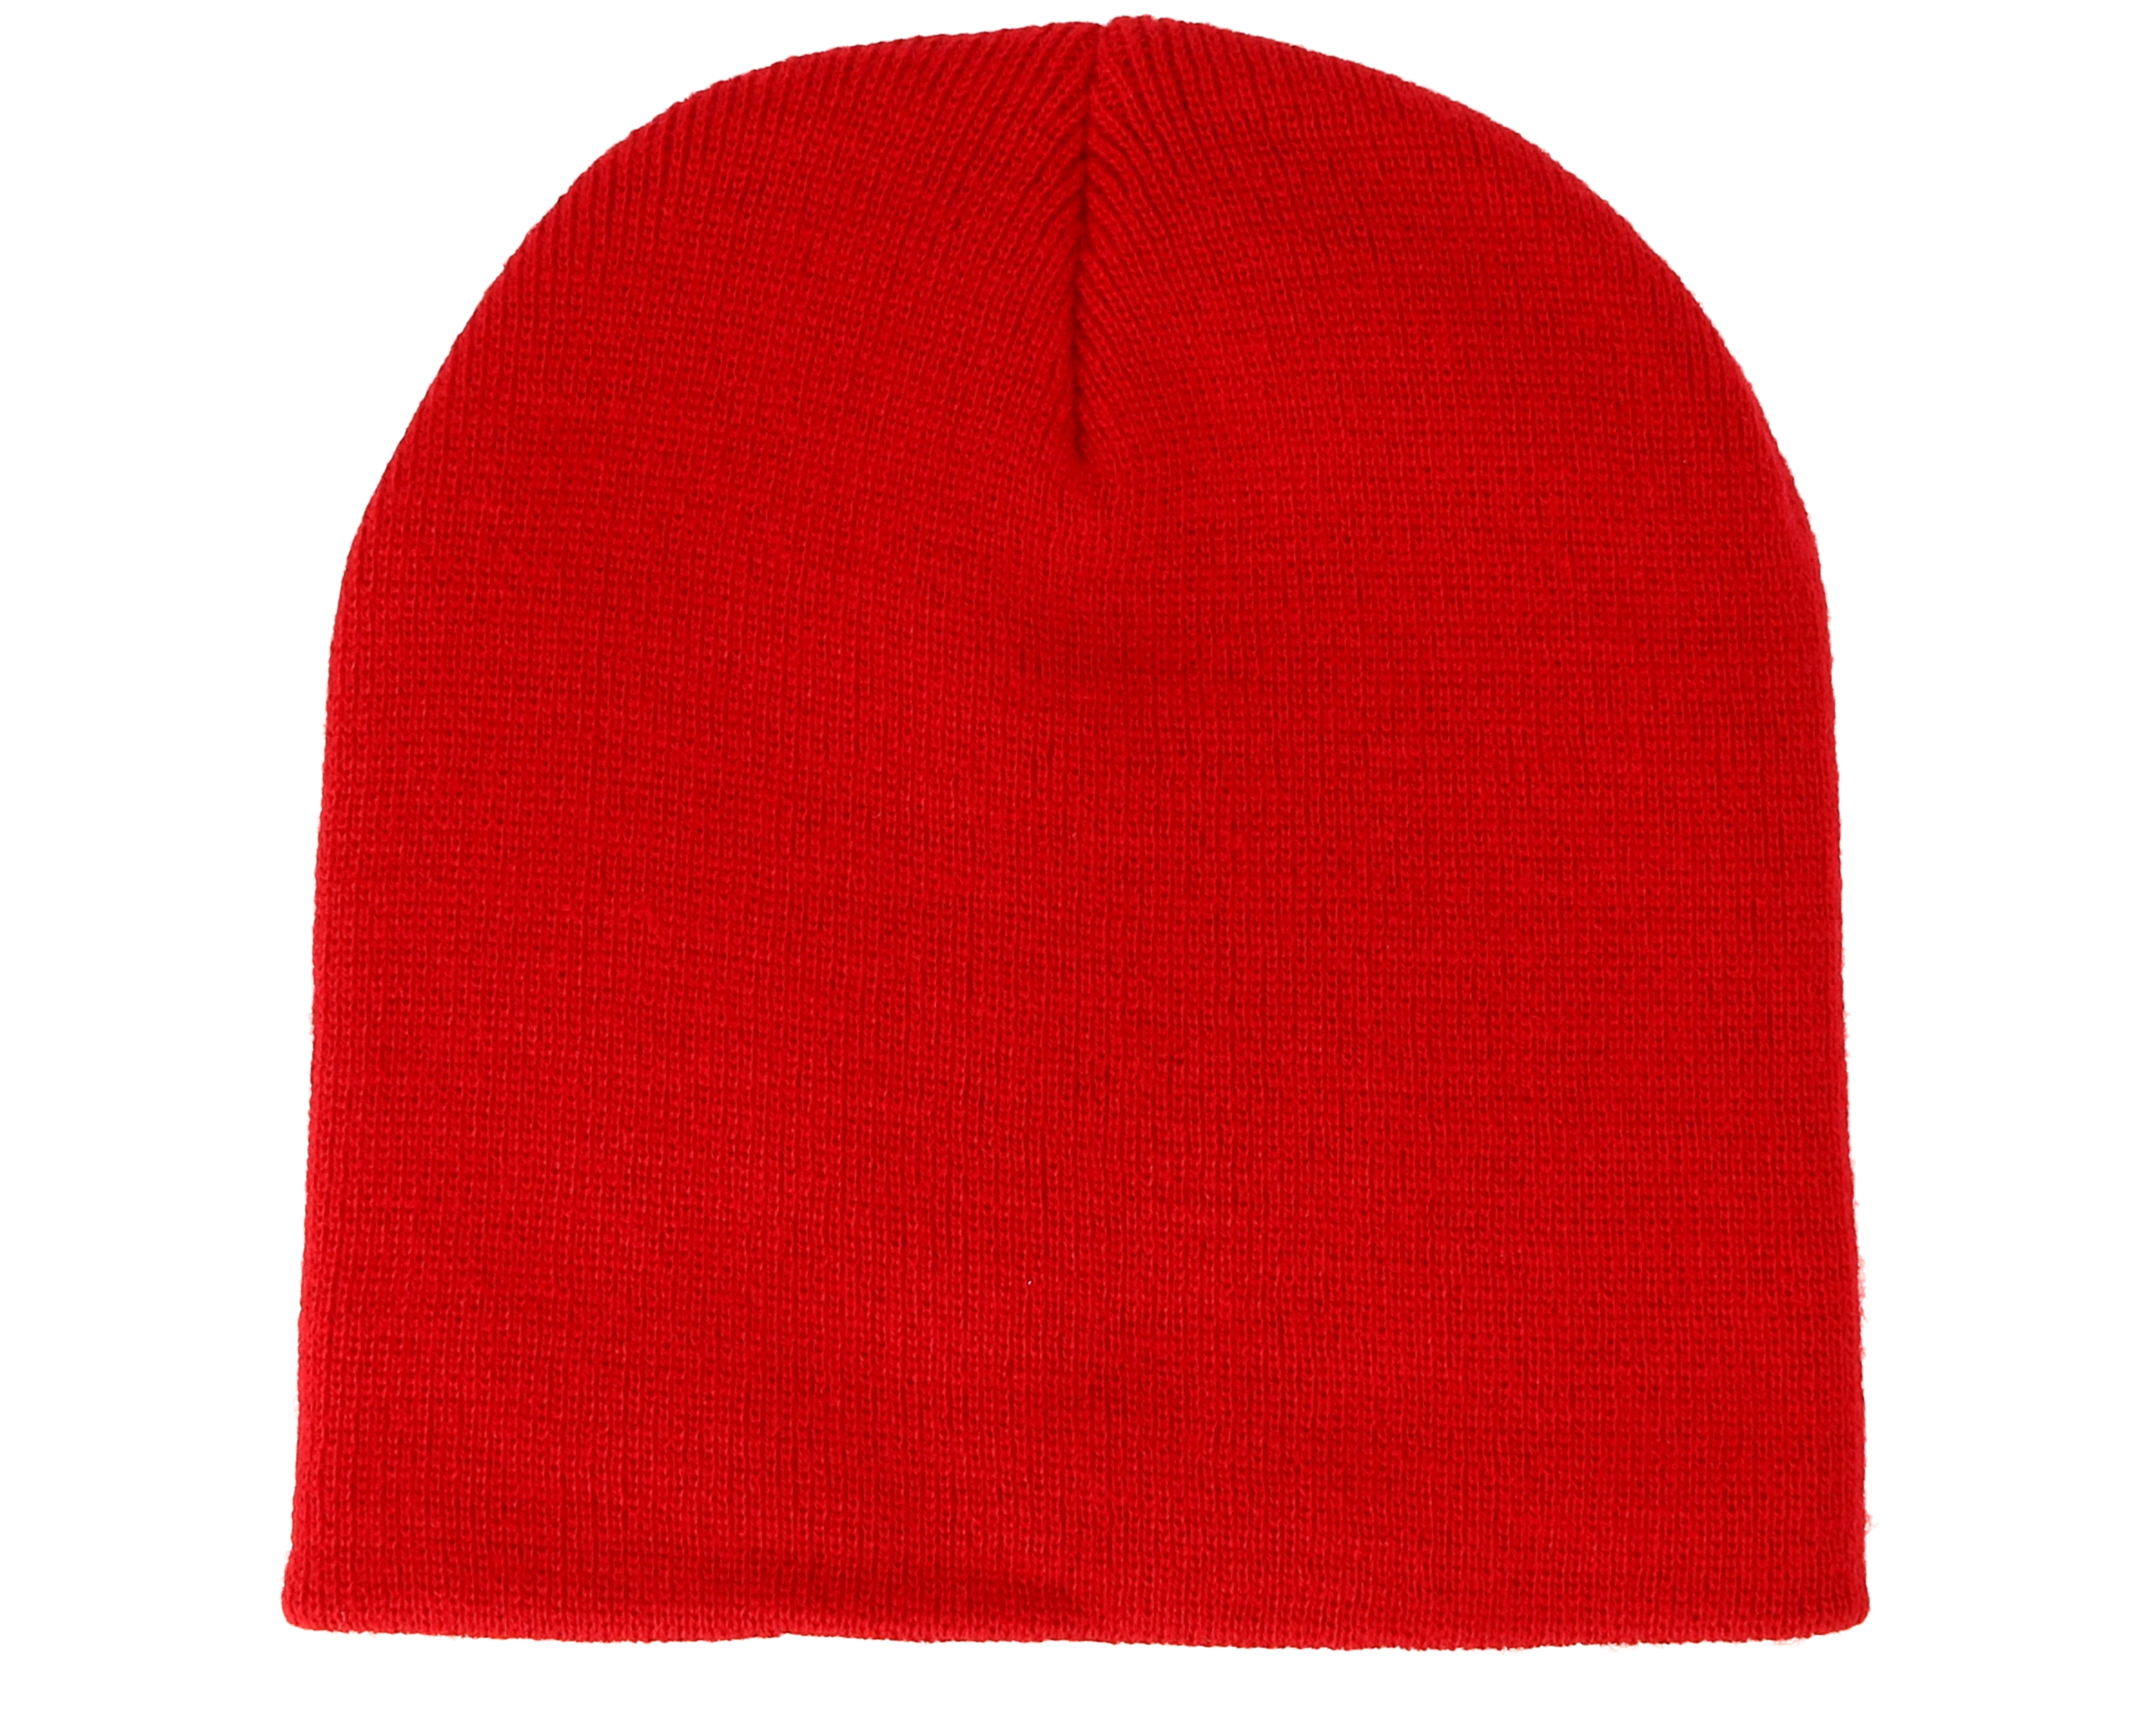 Knitted Short Classic Red Beanie Beanie Basic Mütze Hatstorede